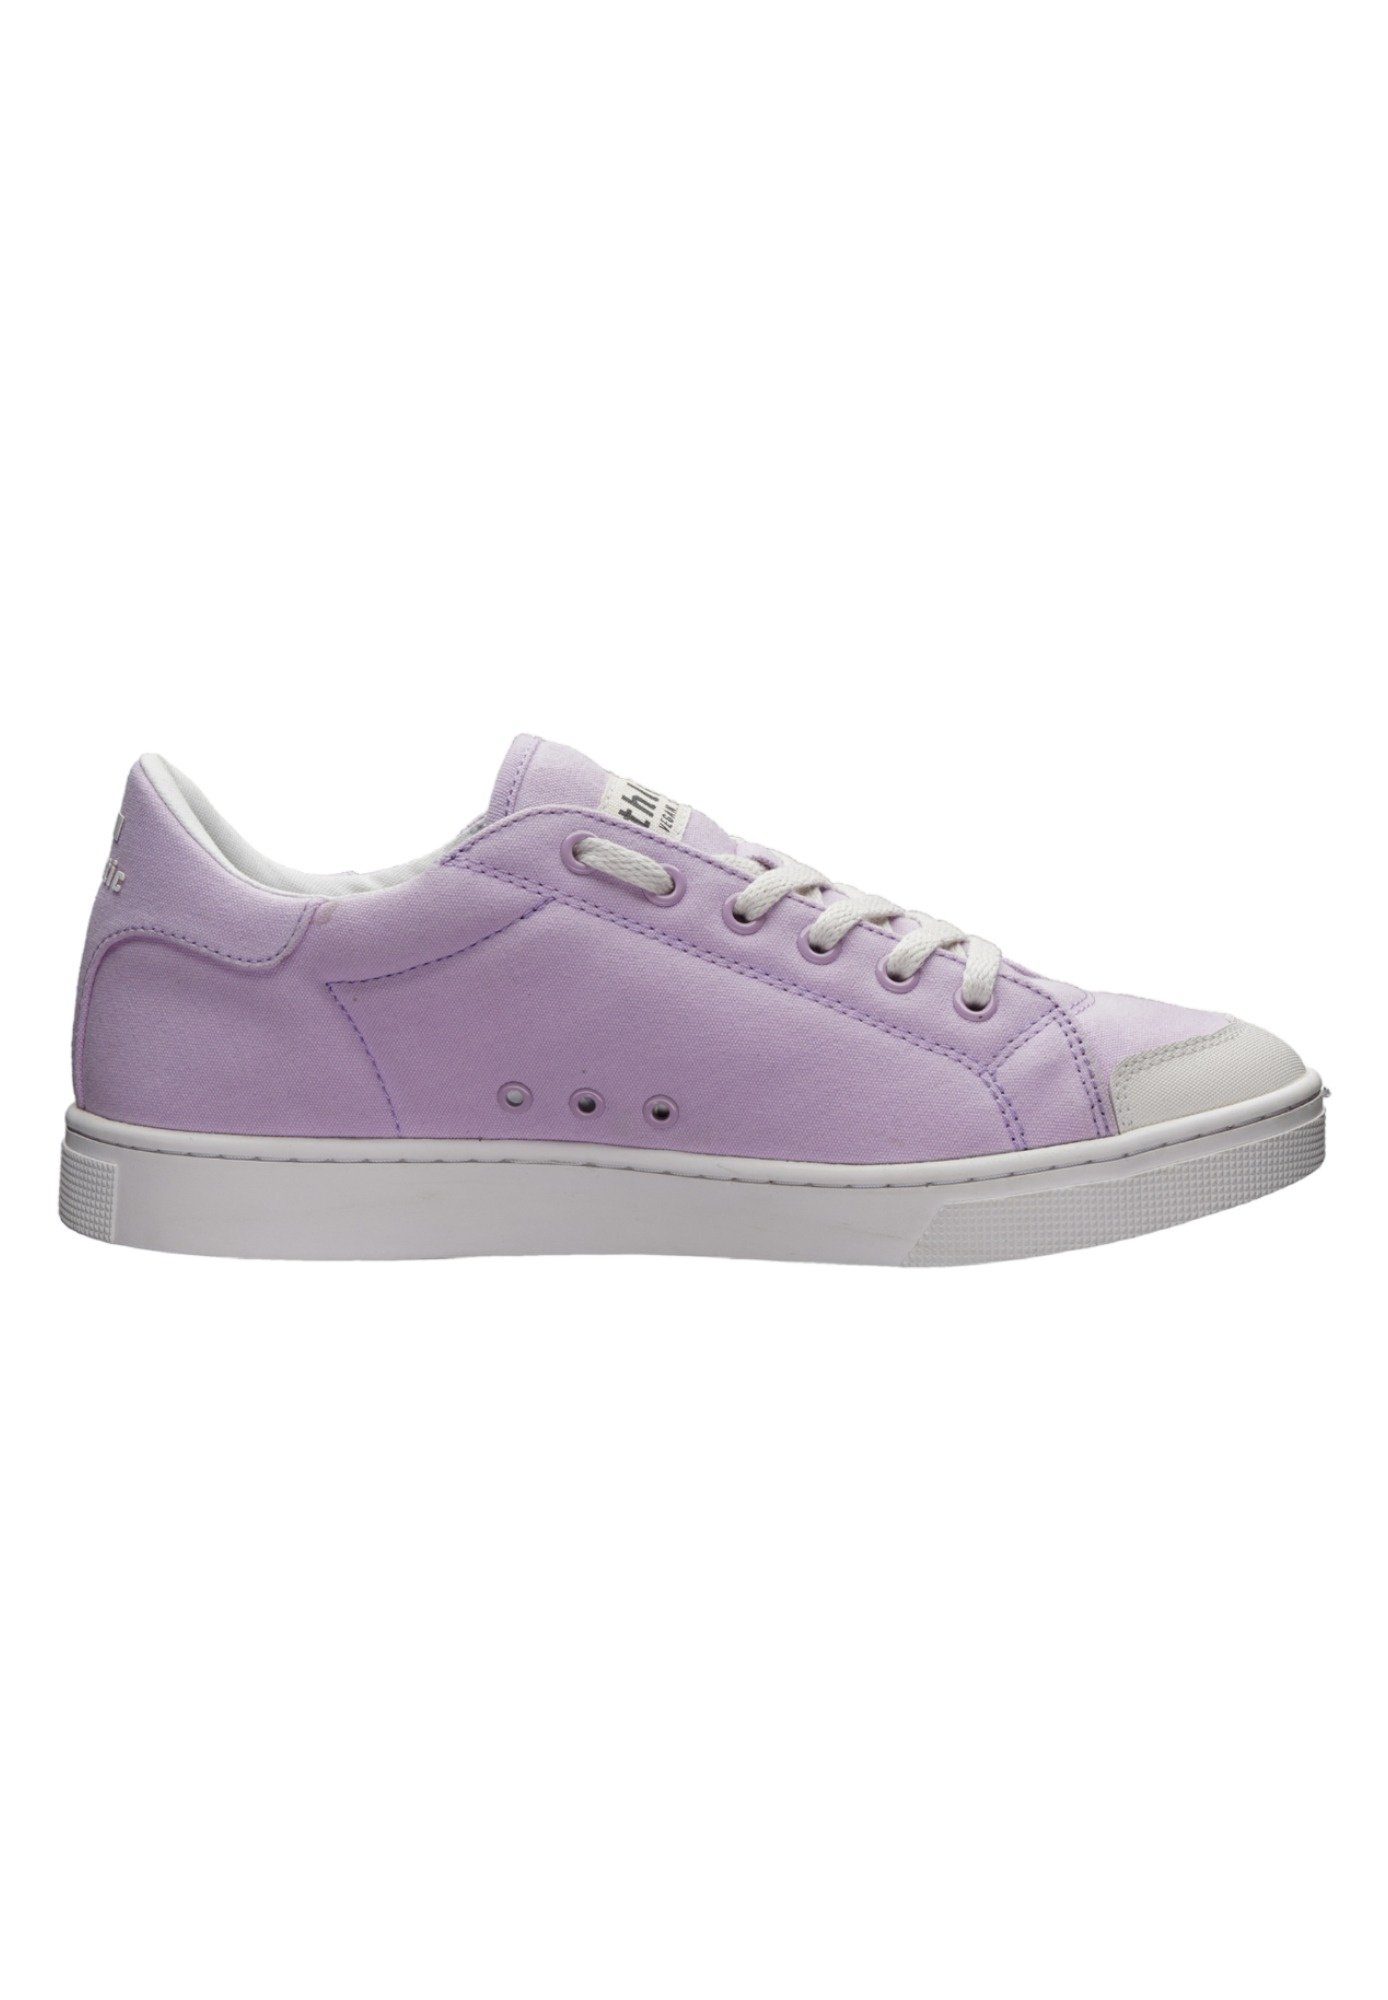 ETHLETIC Lavender Sneaker Pink White Cut Just Produkt Active Fairtrade Lo -